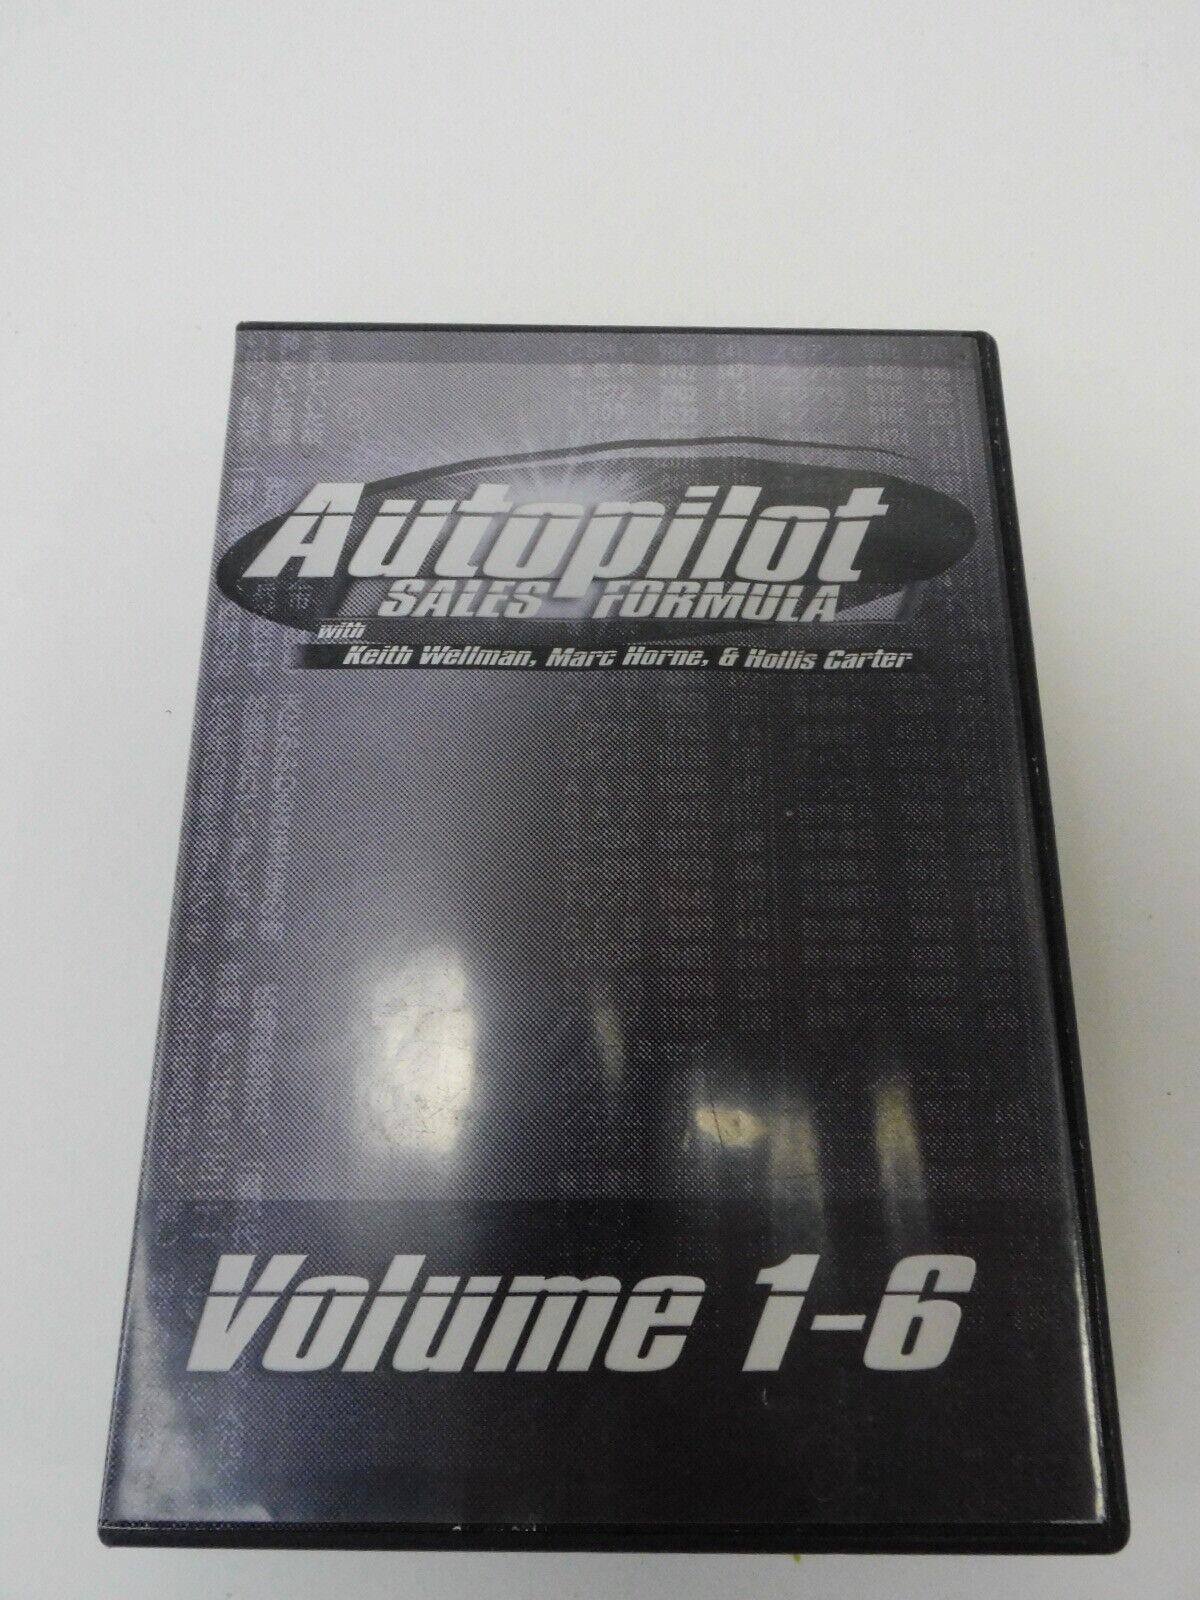 AUTOPILOT SALES FORMULA KEITH WELLMAN VOLUME 1-6 DVD 2008 FX MARKETING Does Not Apply - фотография #3